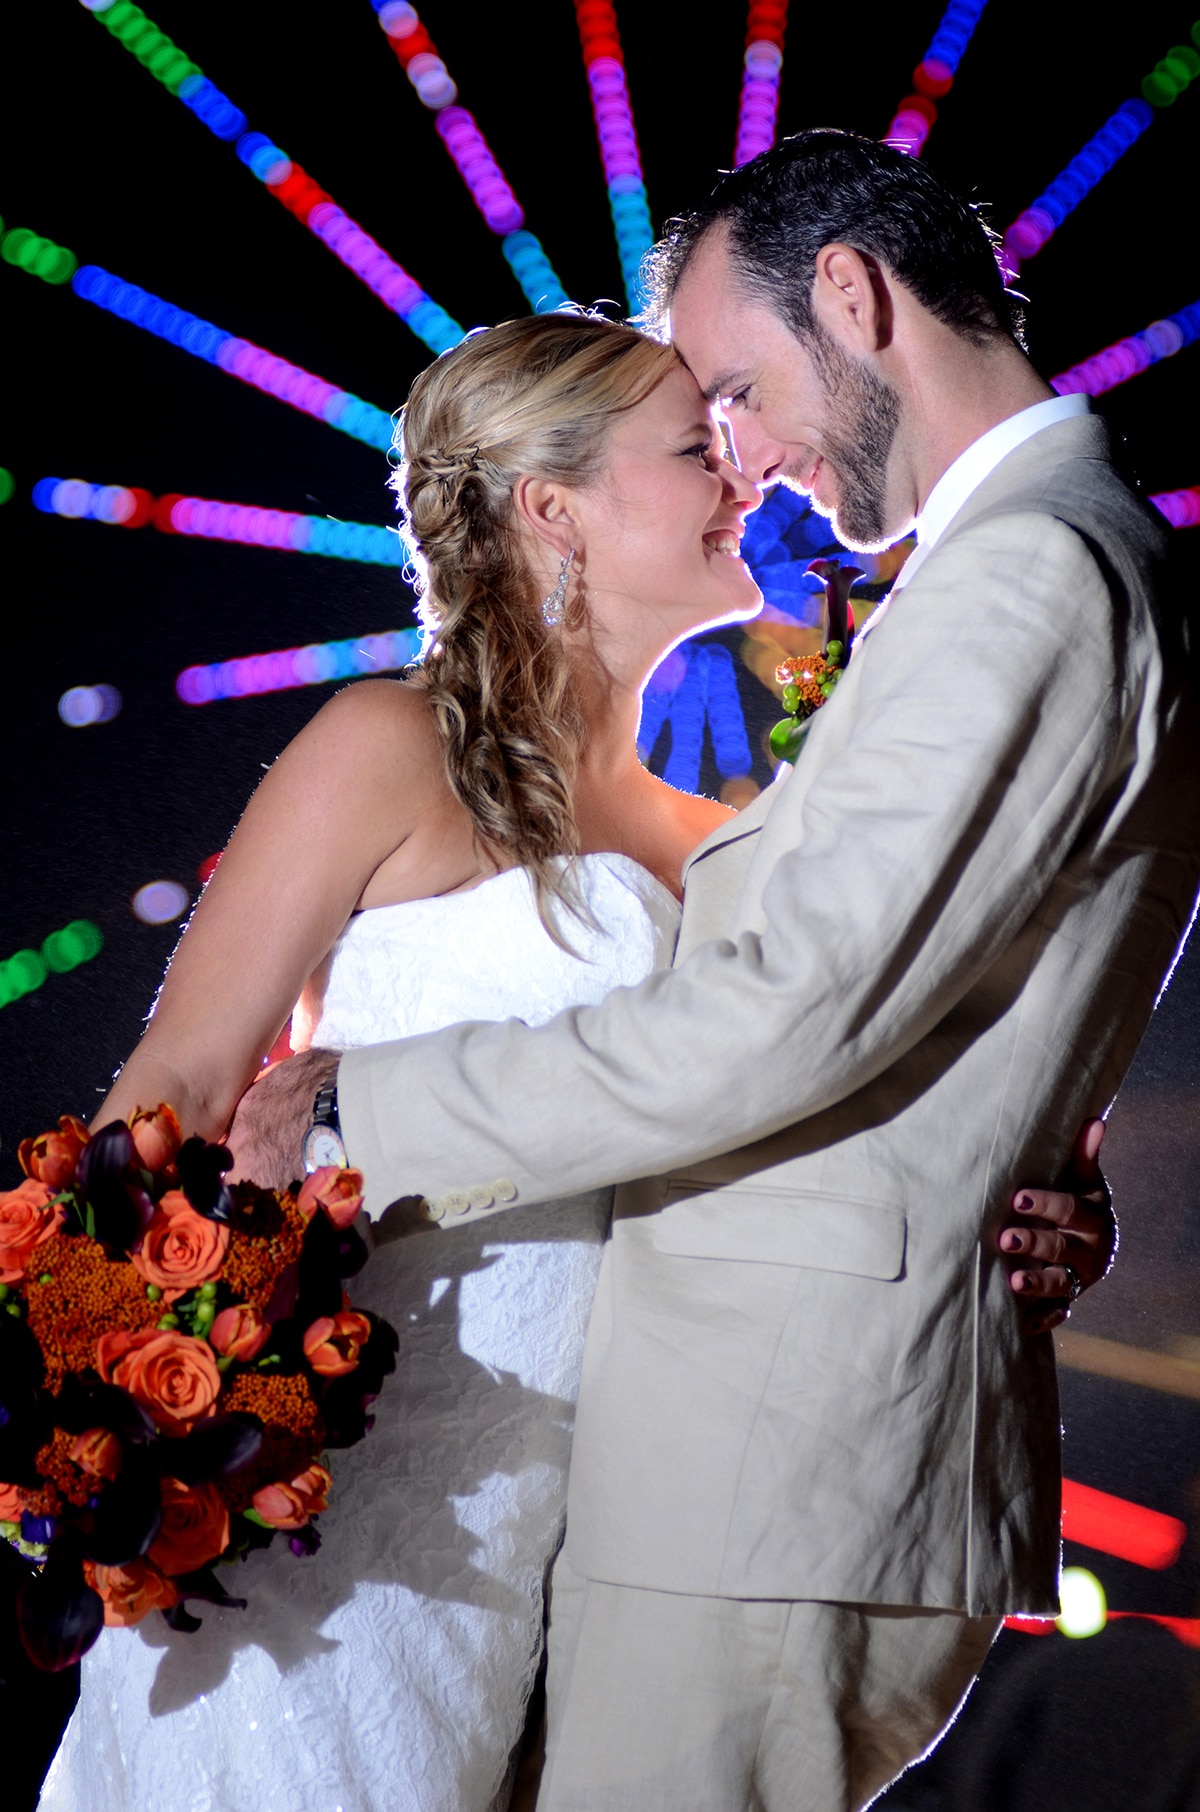 Lighting Styles in Wedding Photography 17